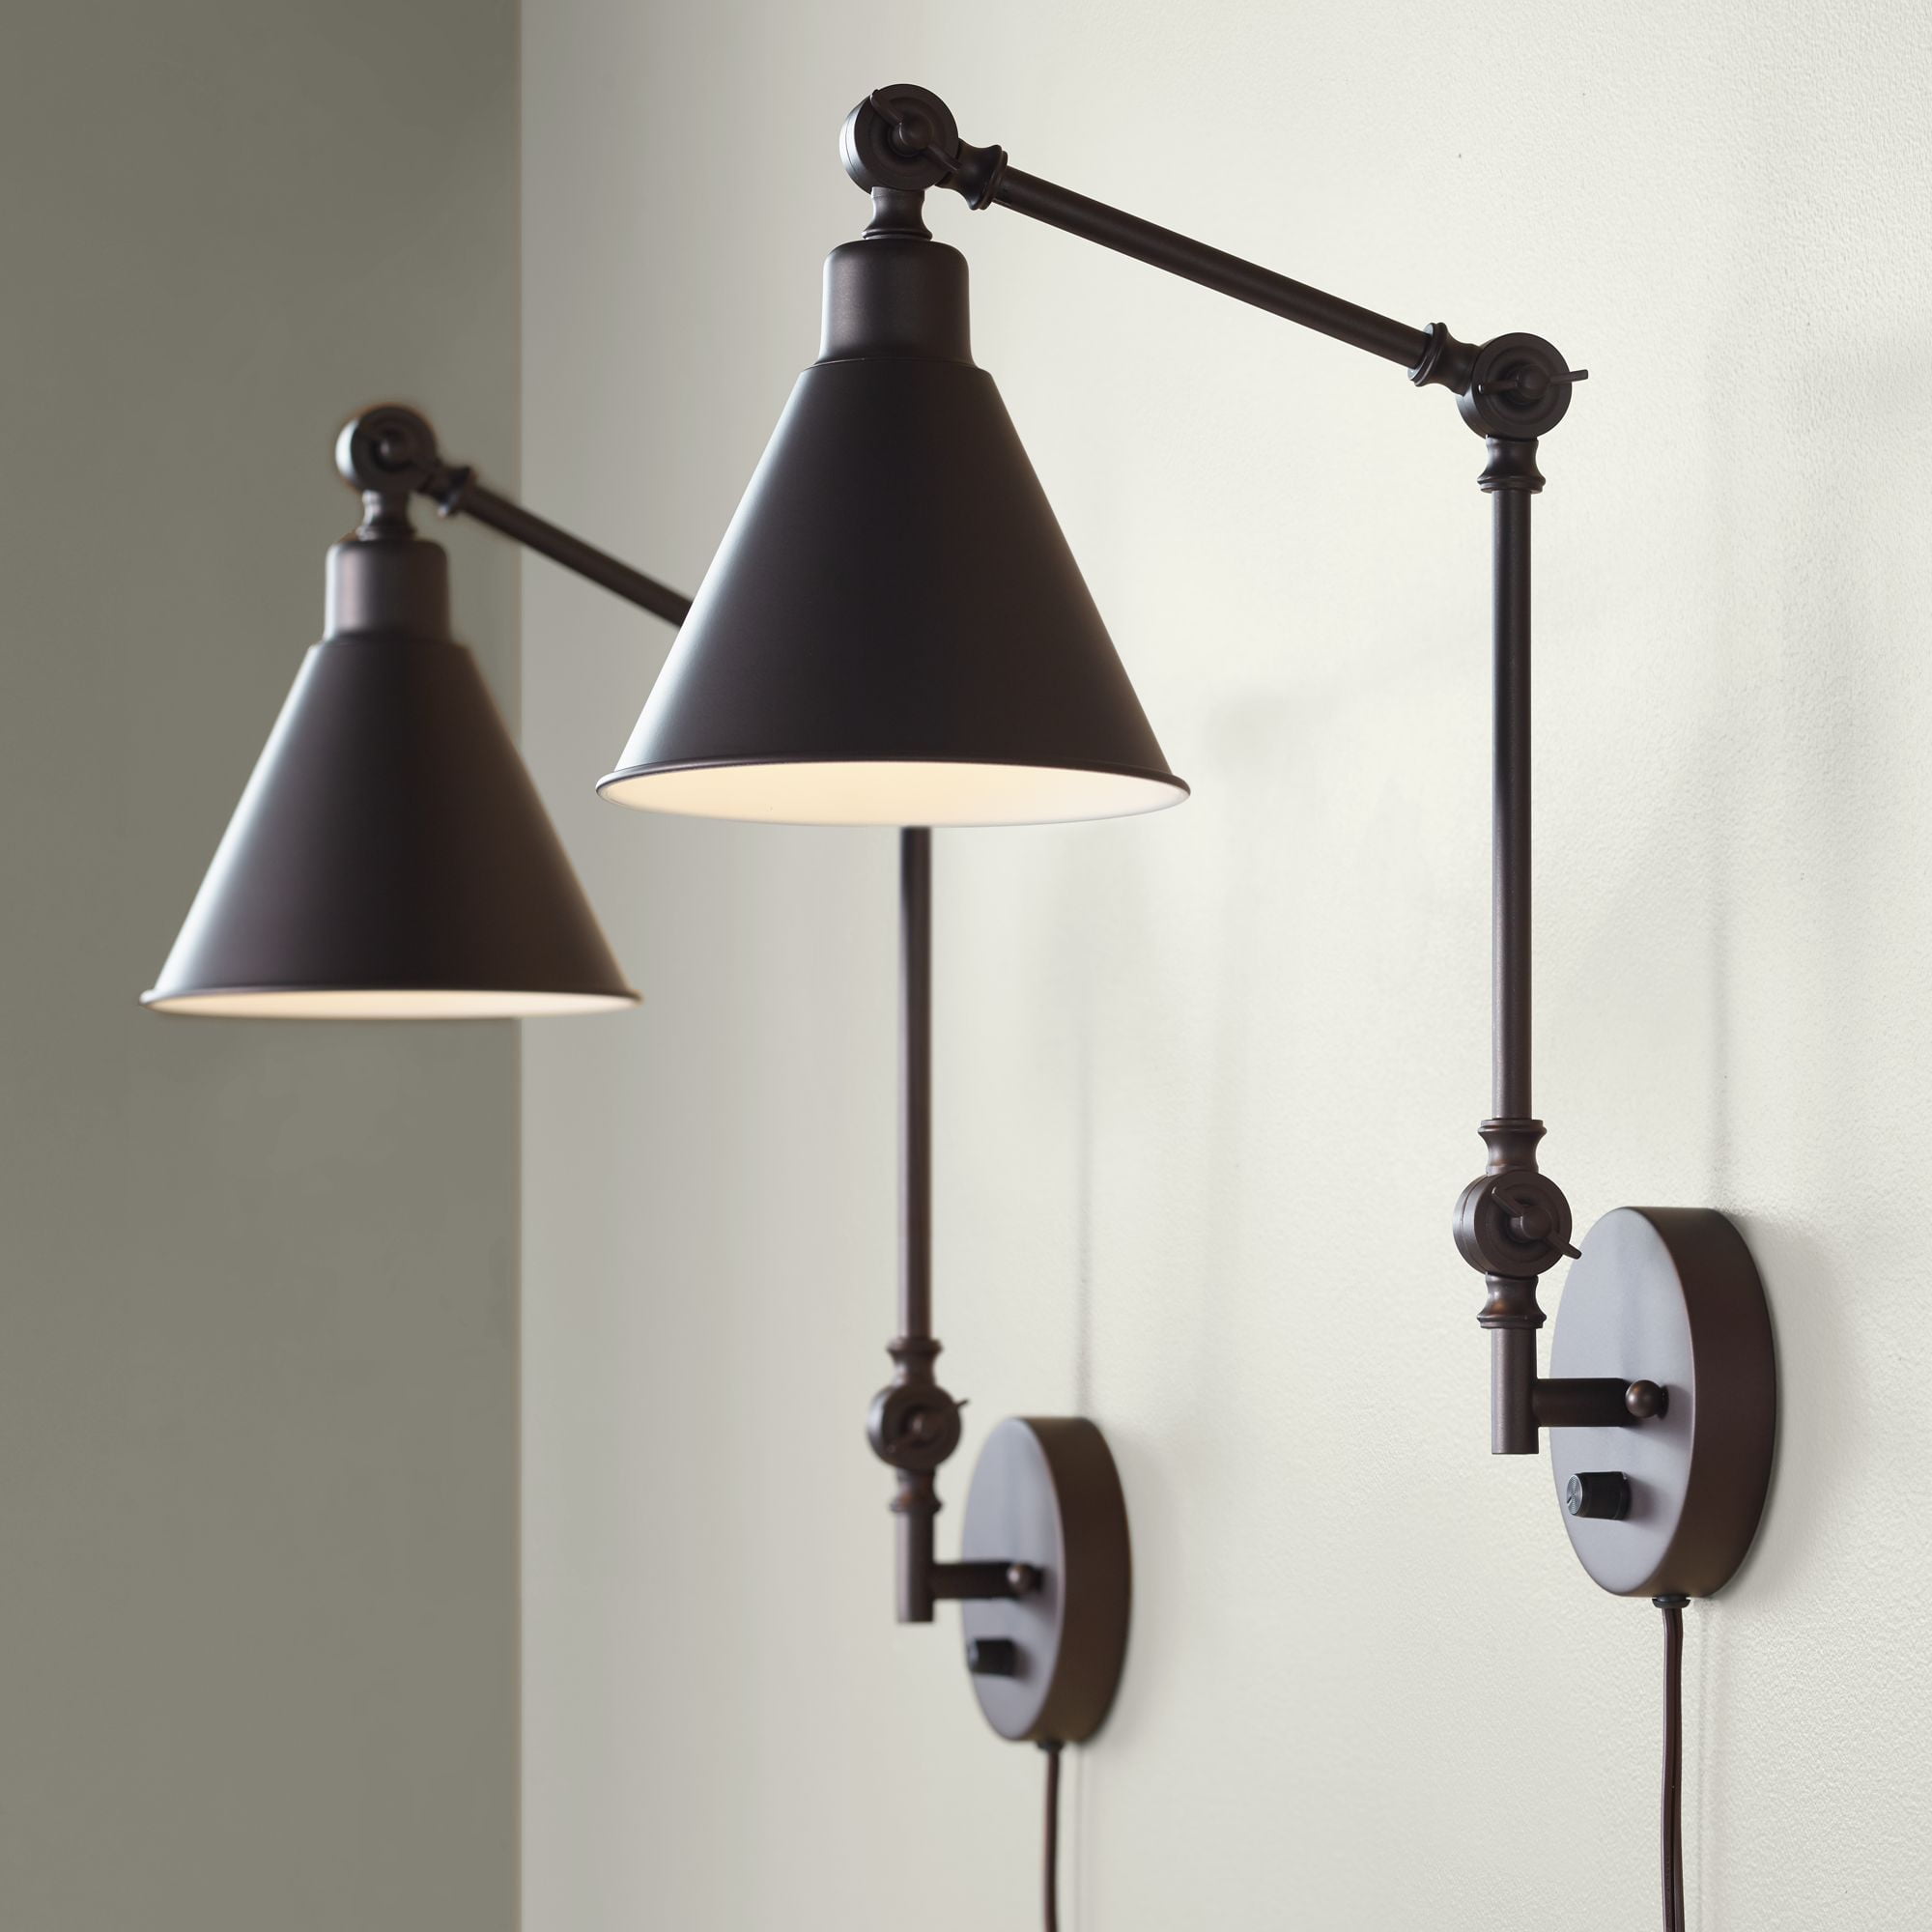 Modern Wall Sconces 2Pcs Adjustable Swing Arm Wall Lamp for Bedroom,Hallway,Bath 